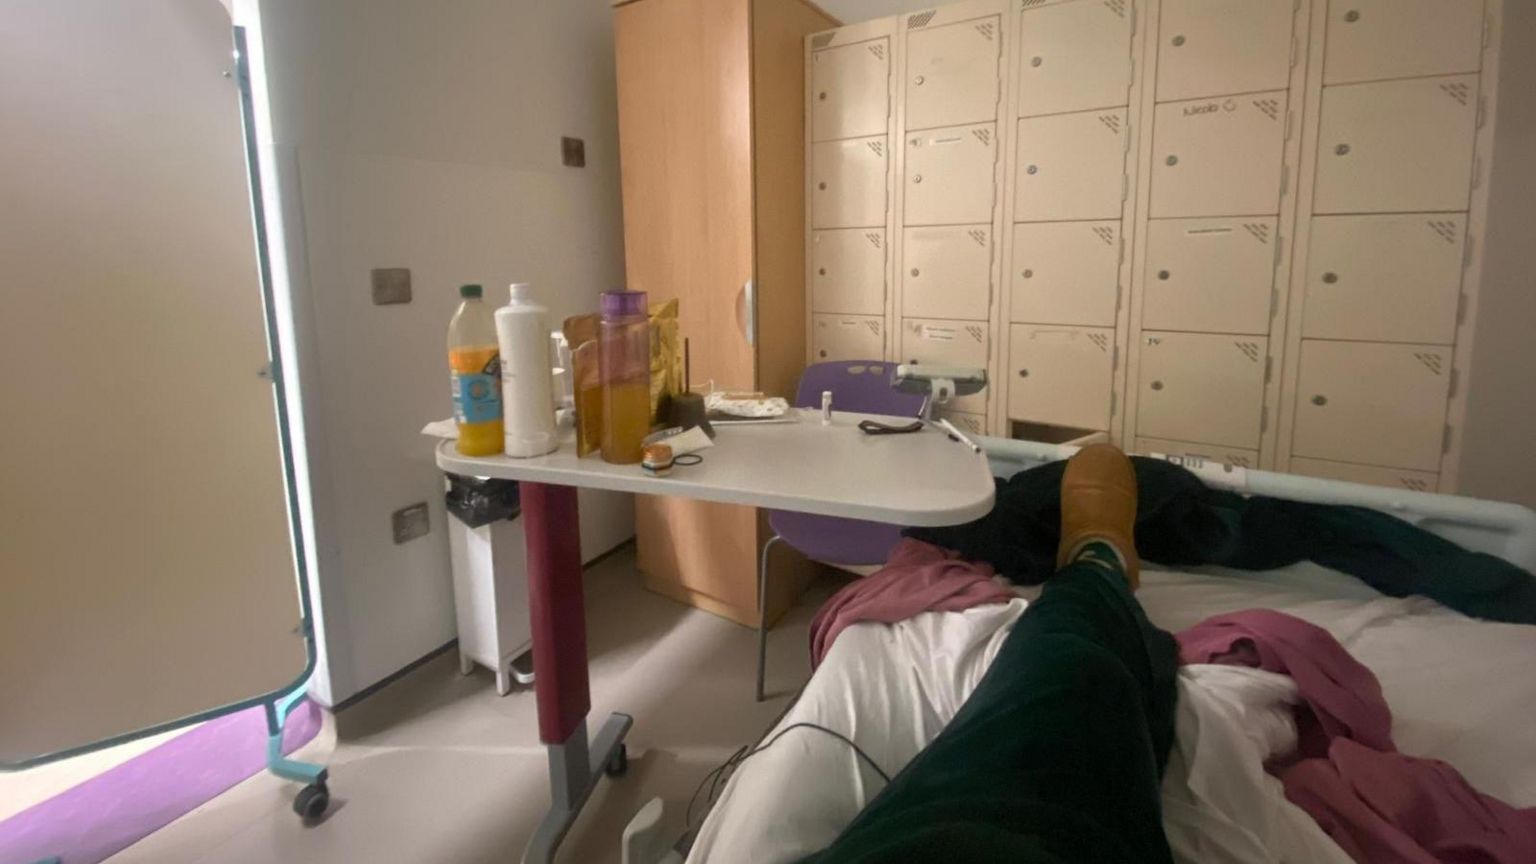 A makeshift bed in a hospital locker room